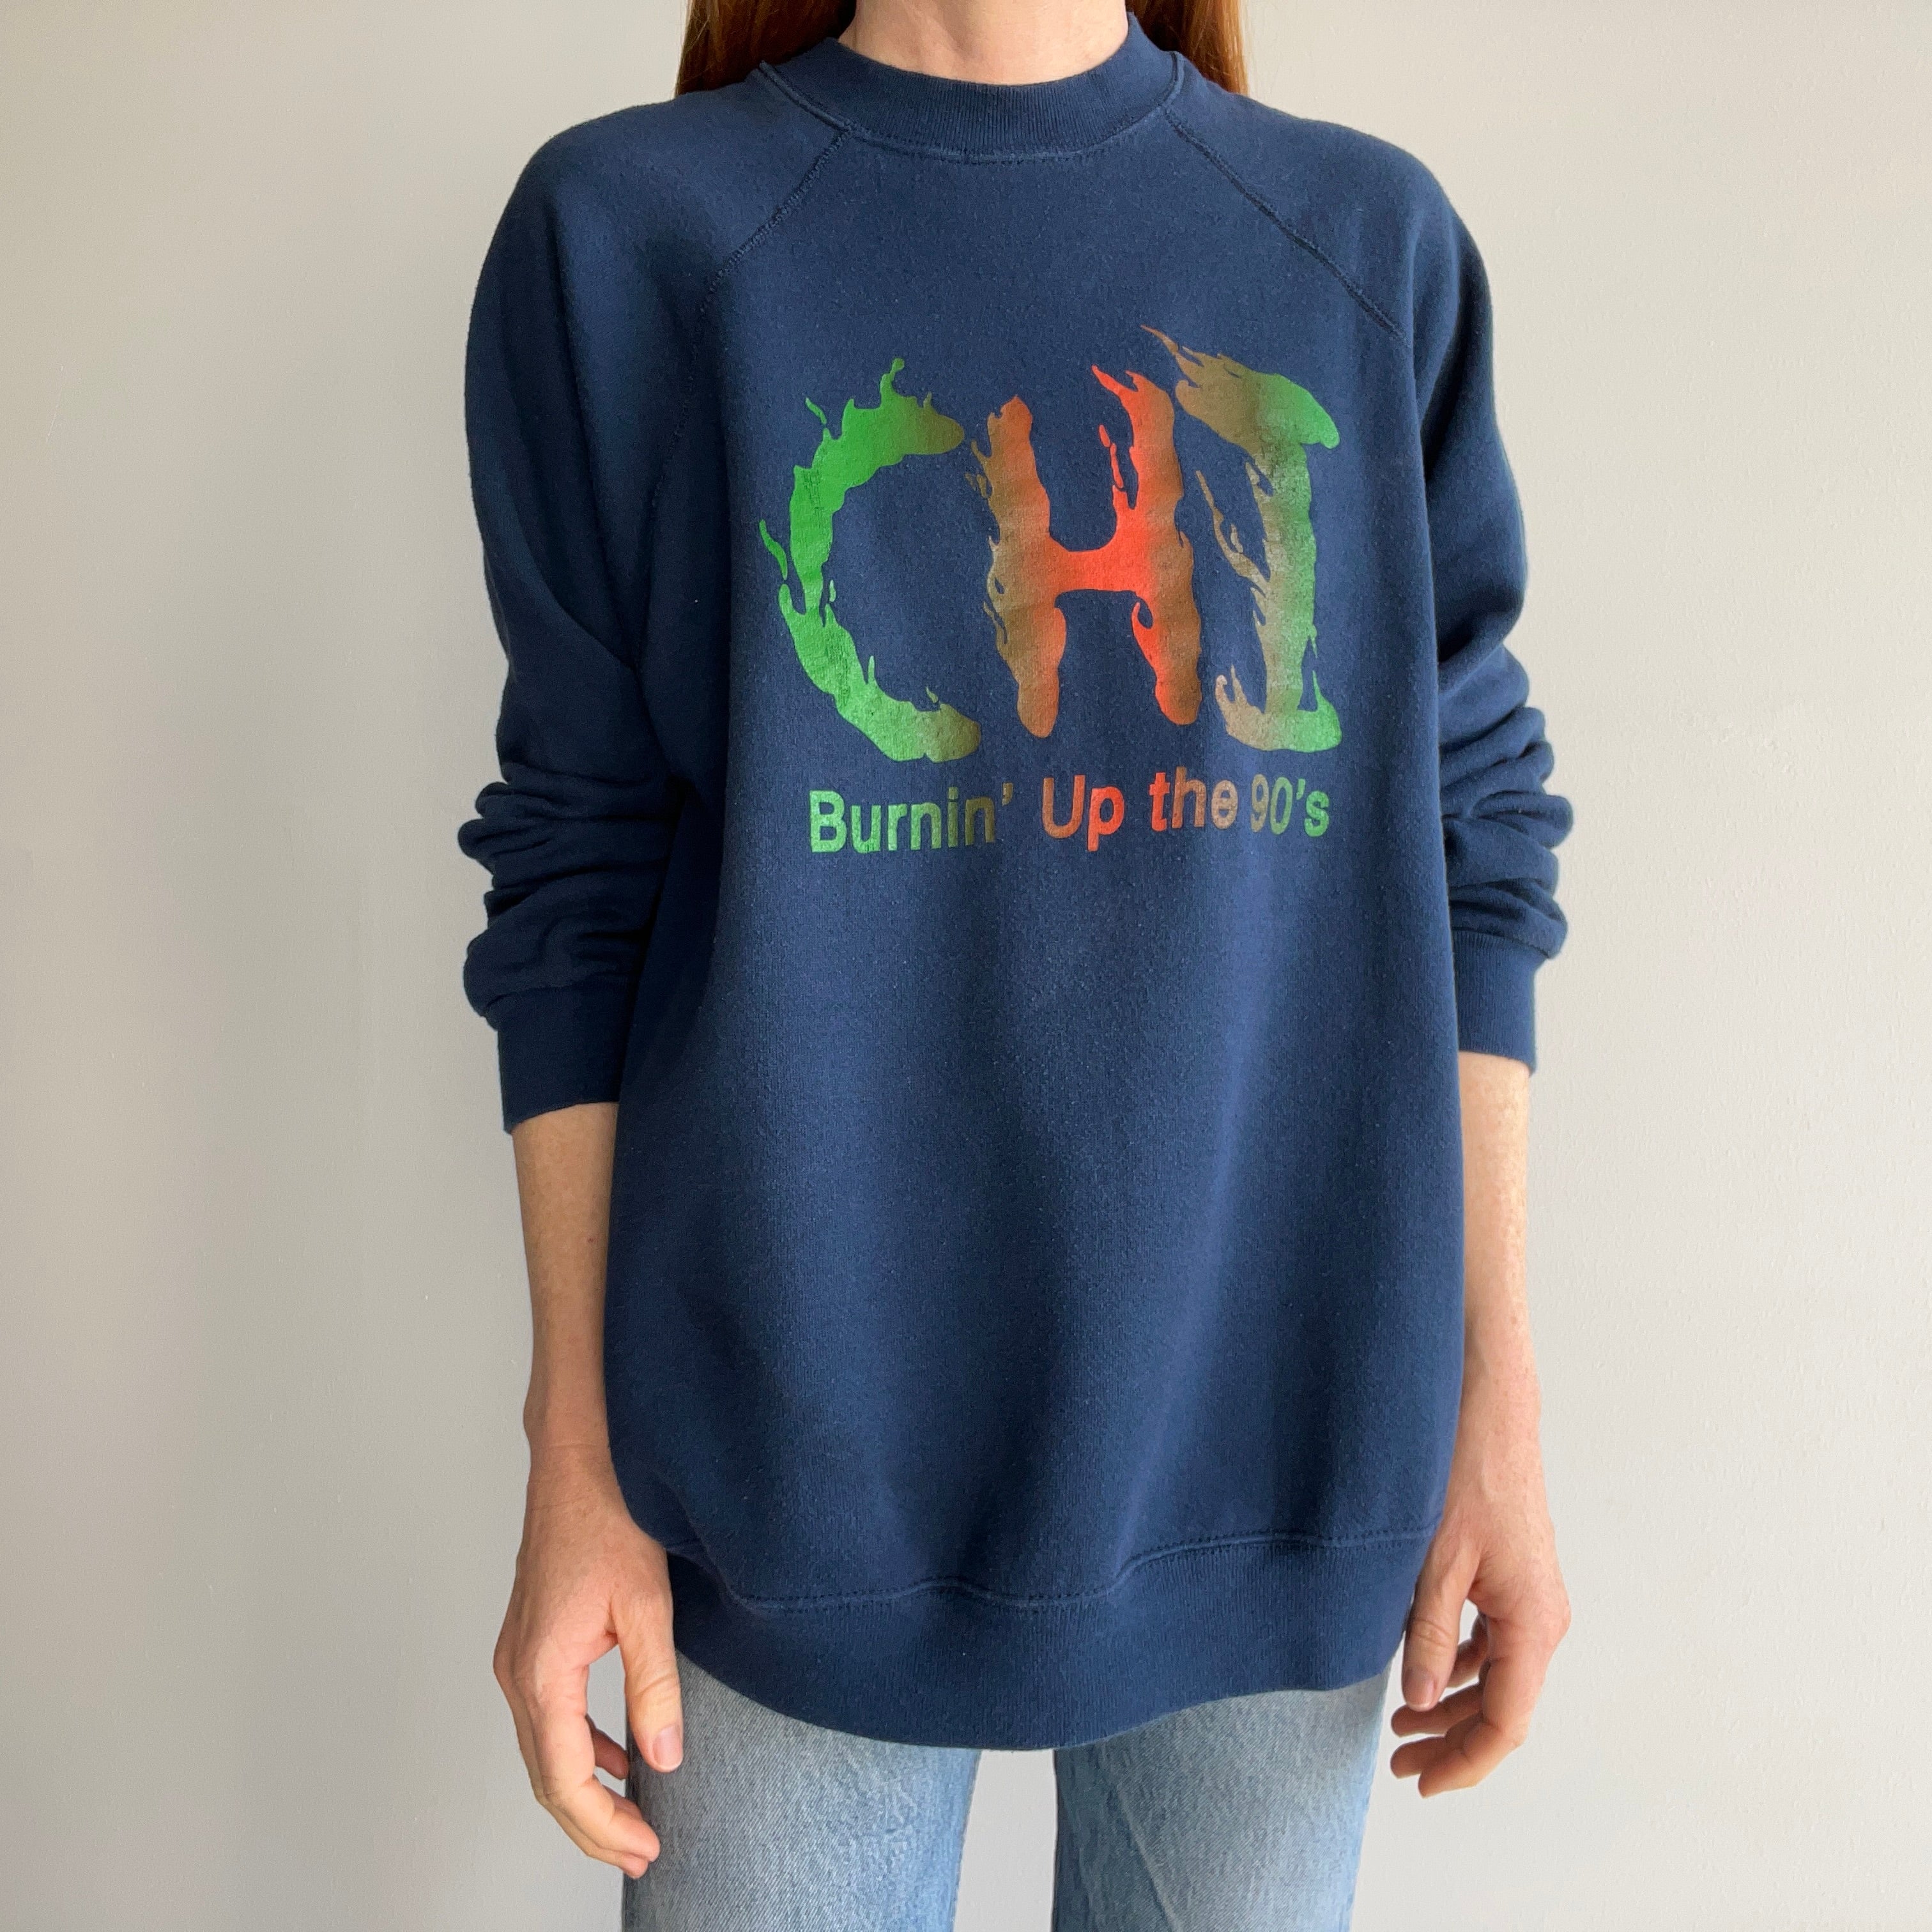 1990s Chi Burning Up The 90s Sweatshirt